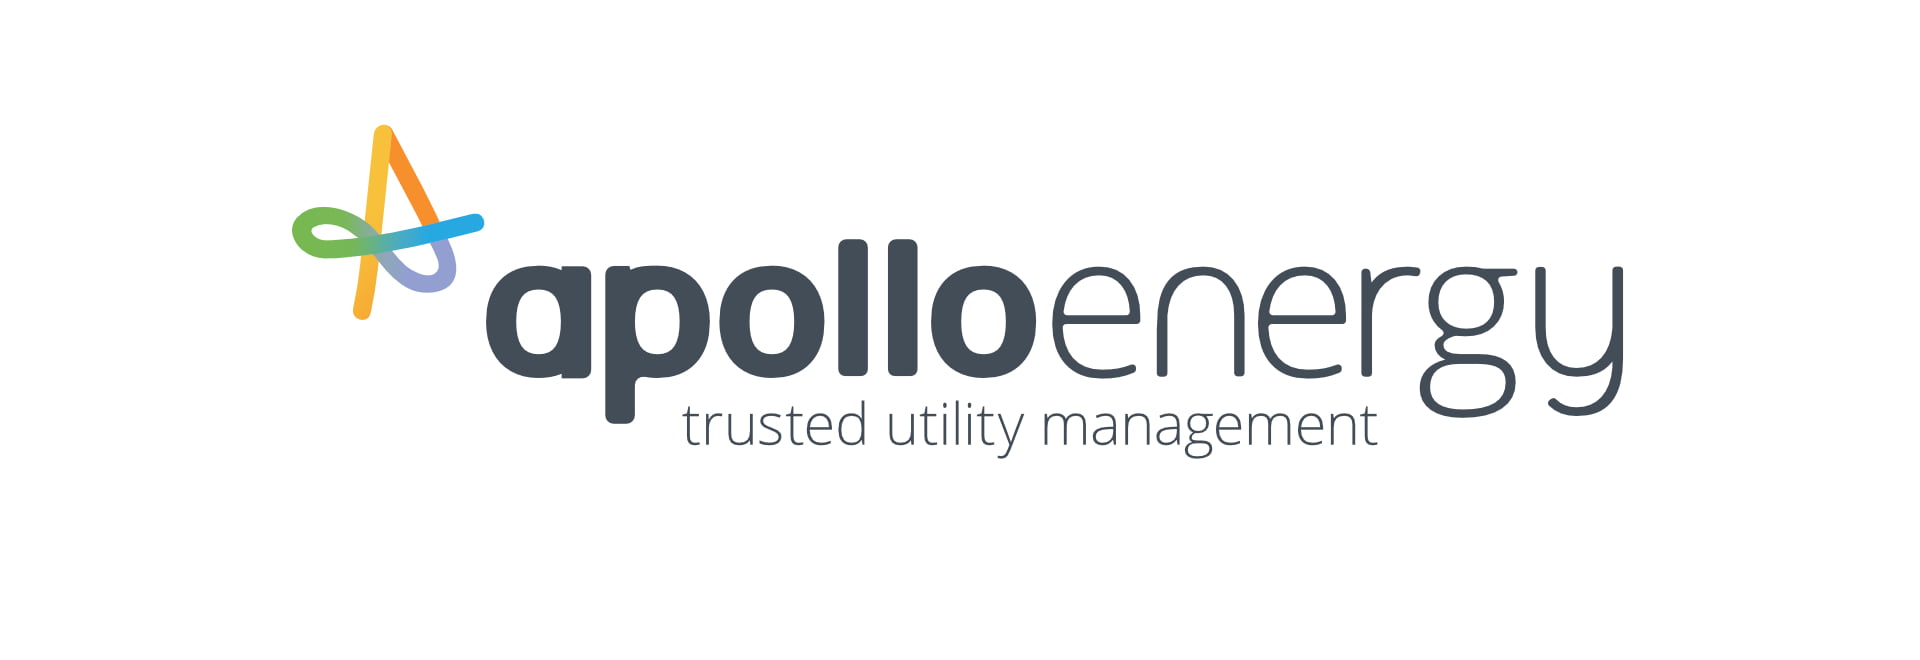 Acquisition of Apollo Energy by Zenergi Group Ltd